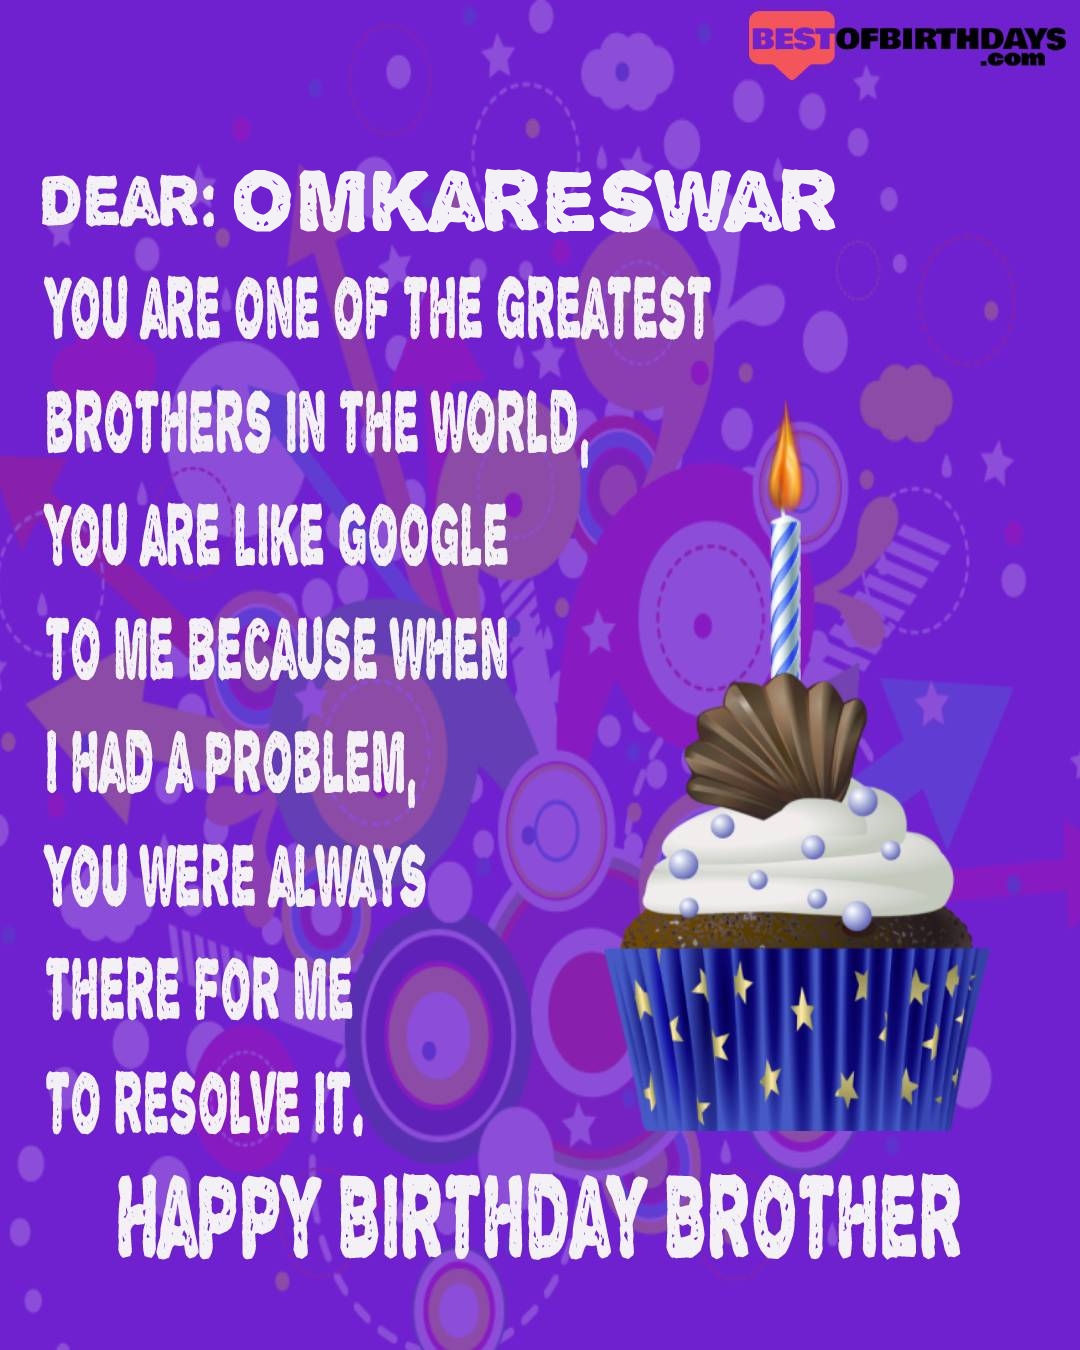 Happy birthday omkareswar bhai brother bro